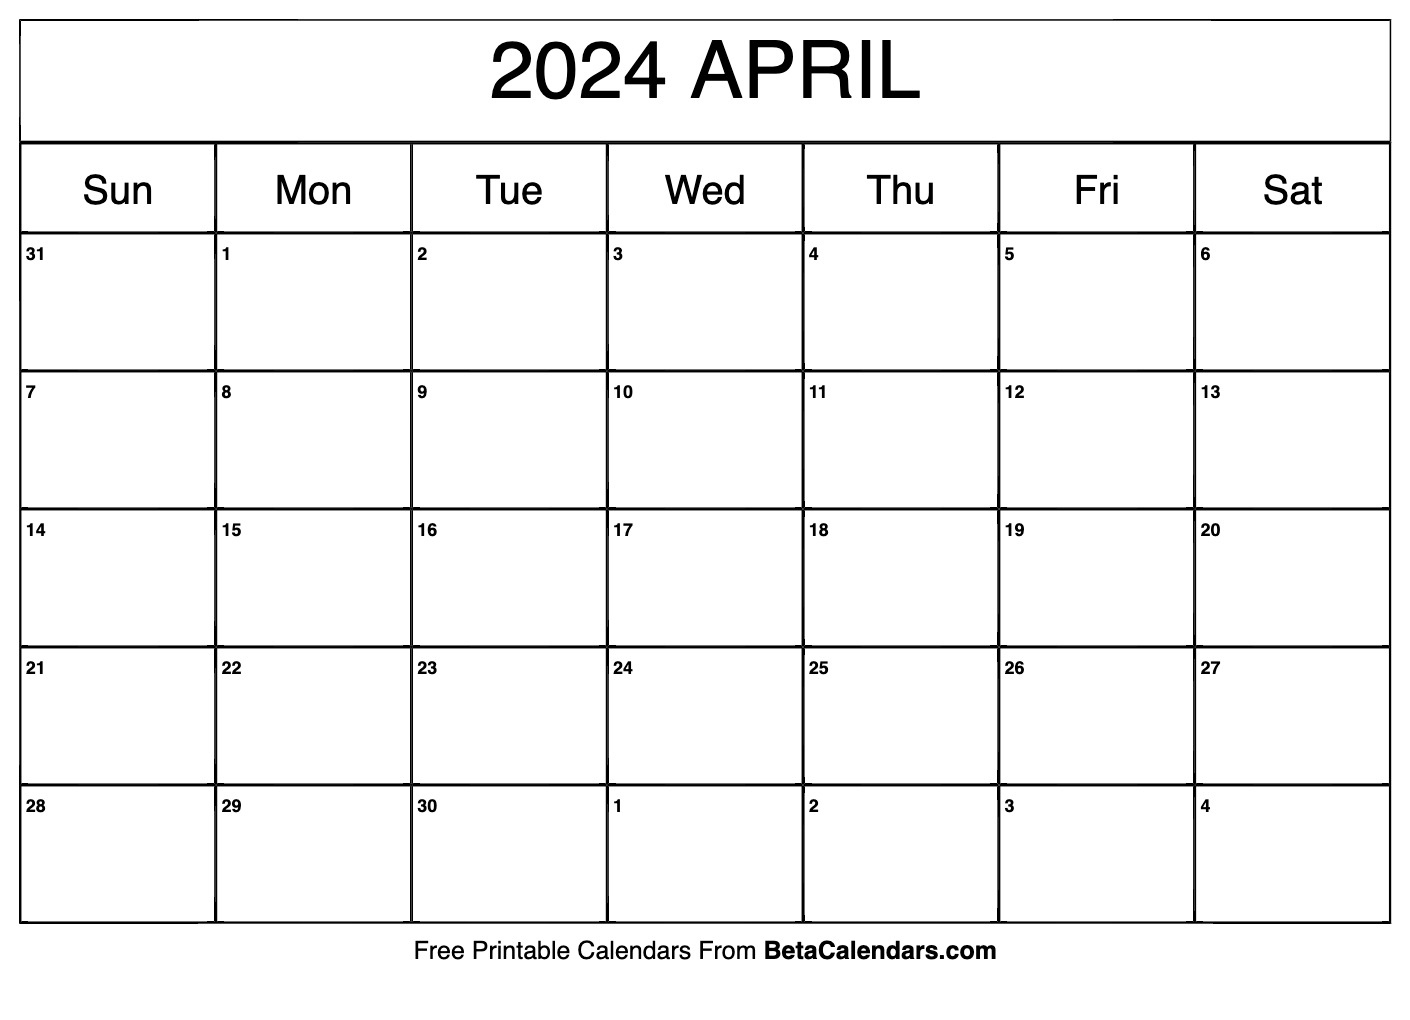 Free Printable April 2024 Calendar intended for Free Printable April 2024 Calendar Word